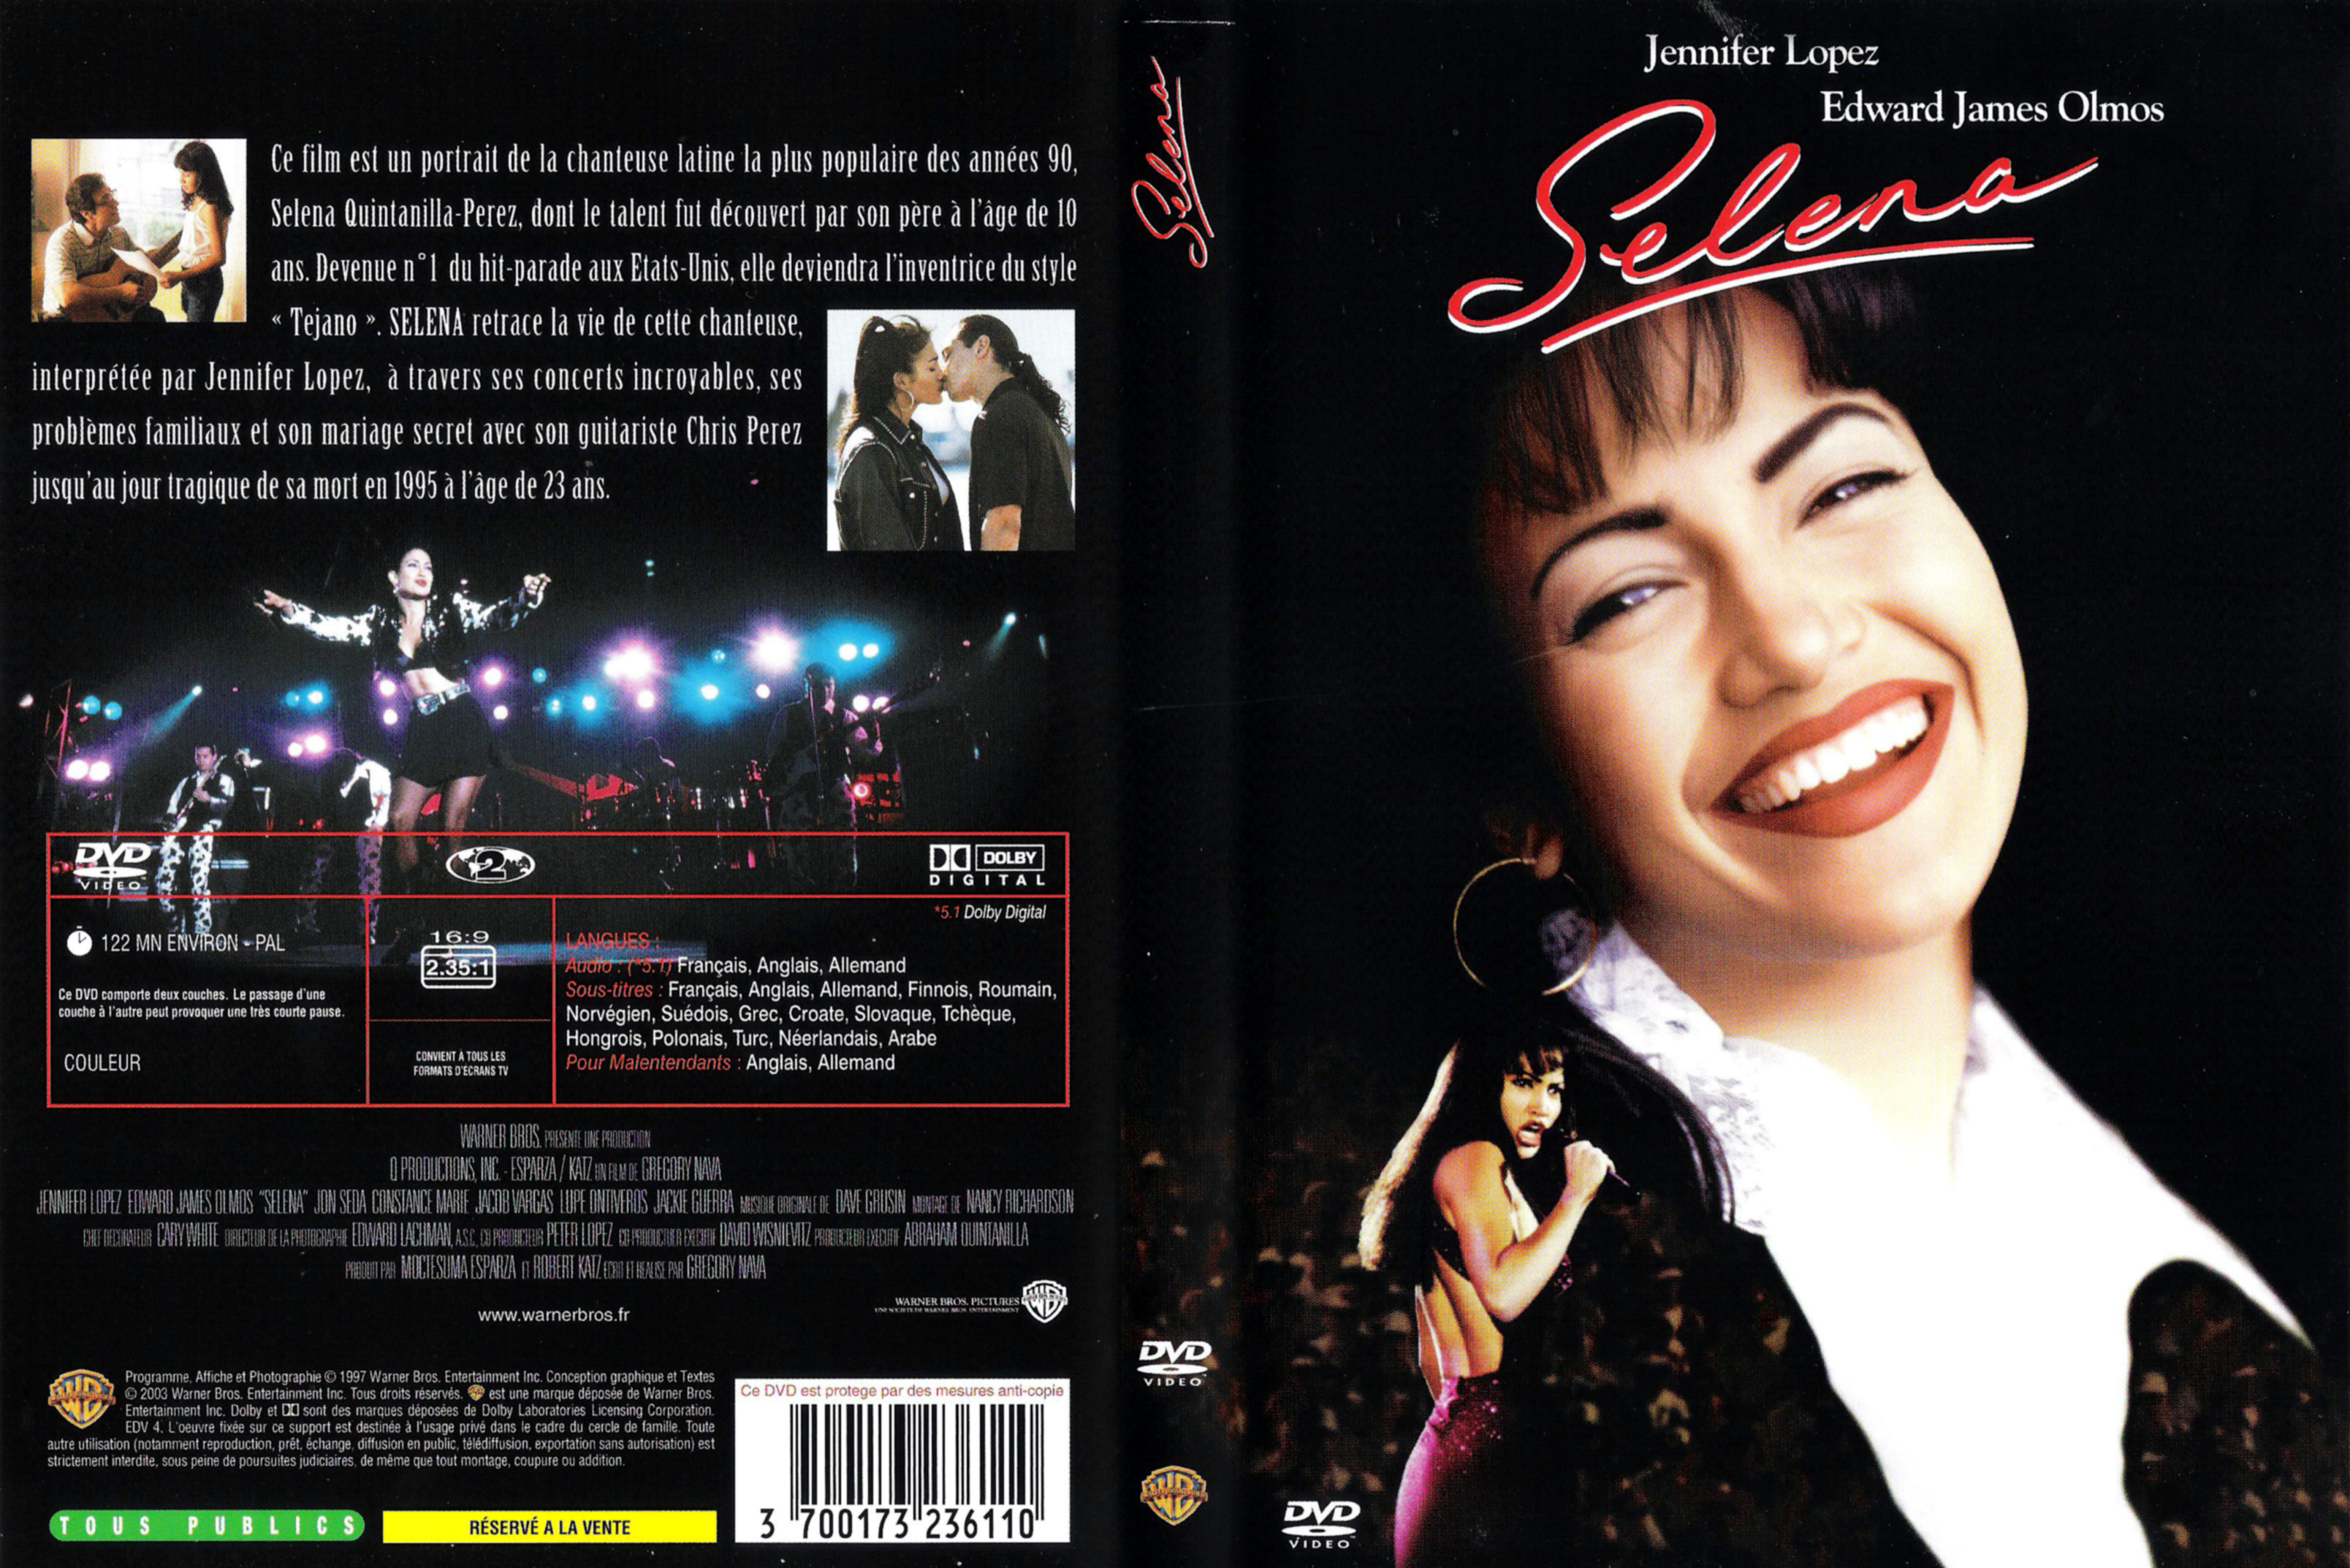 Jaquette DVD Selena v2